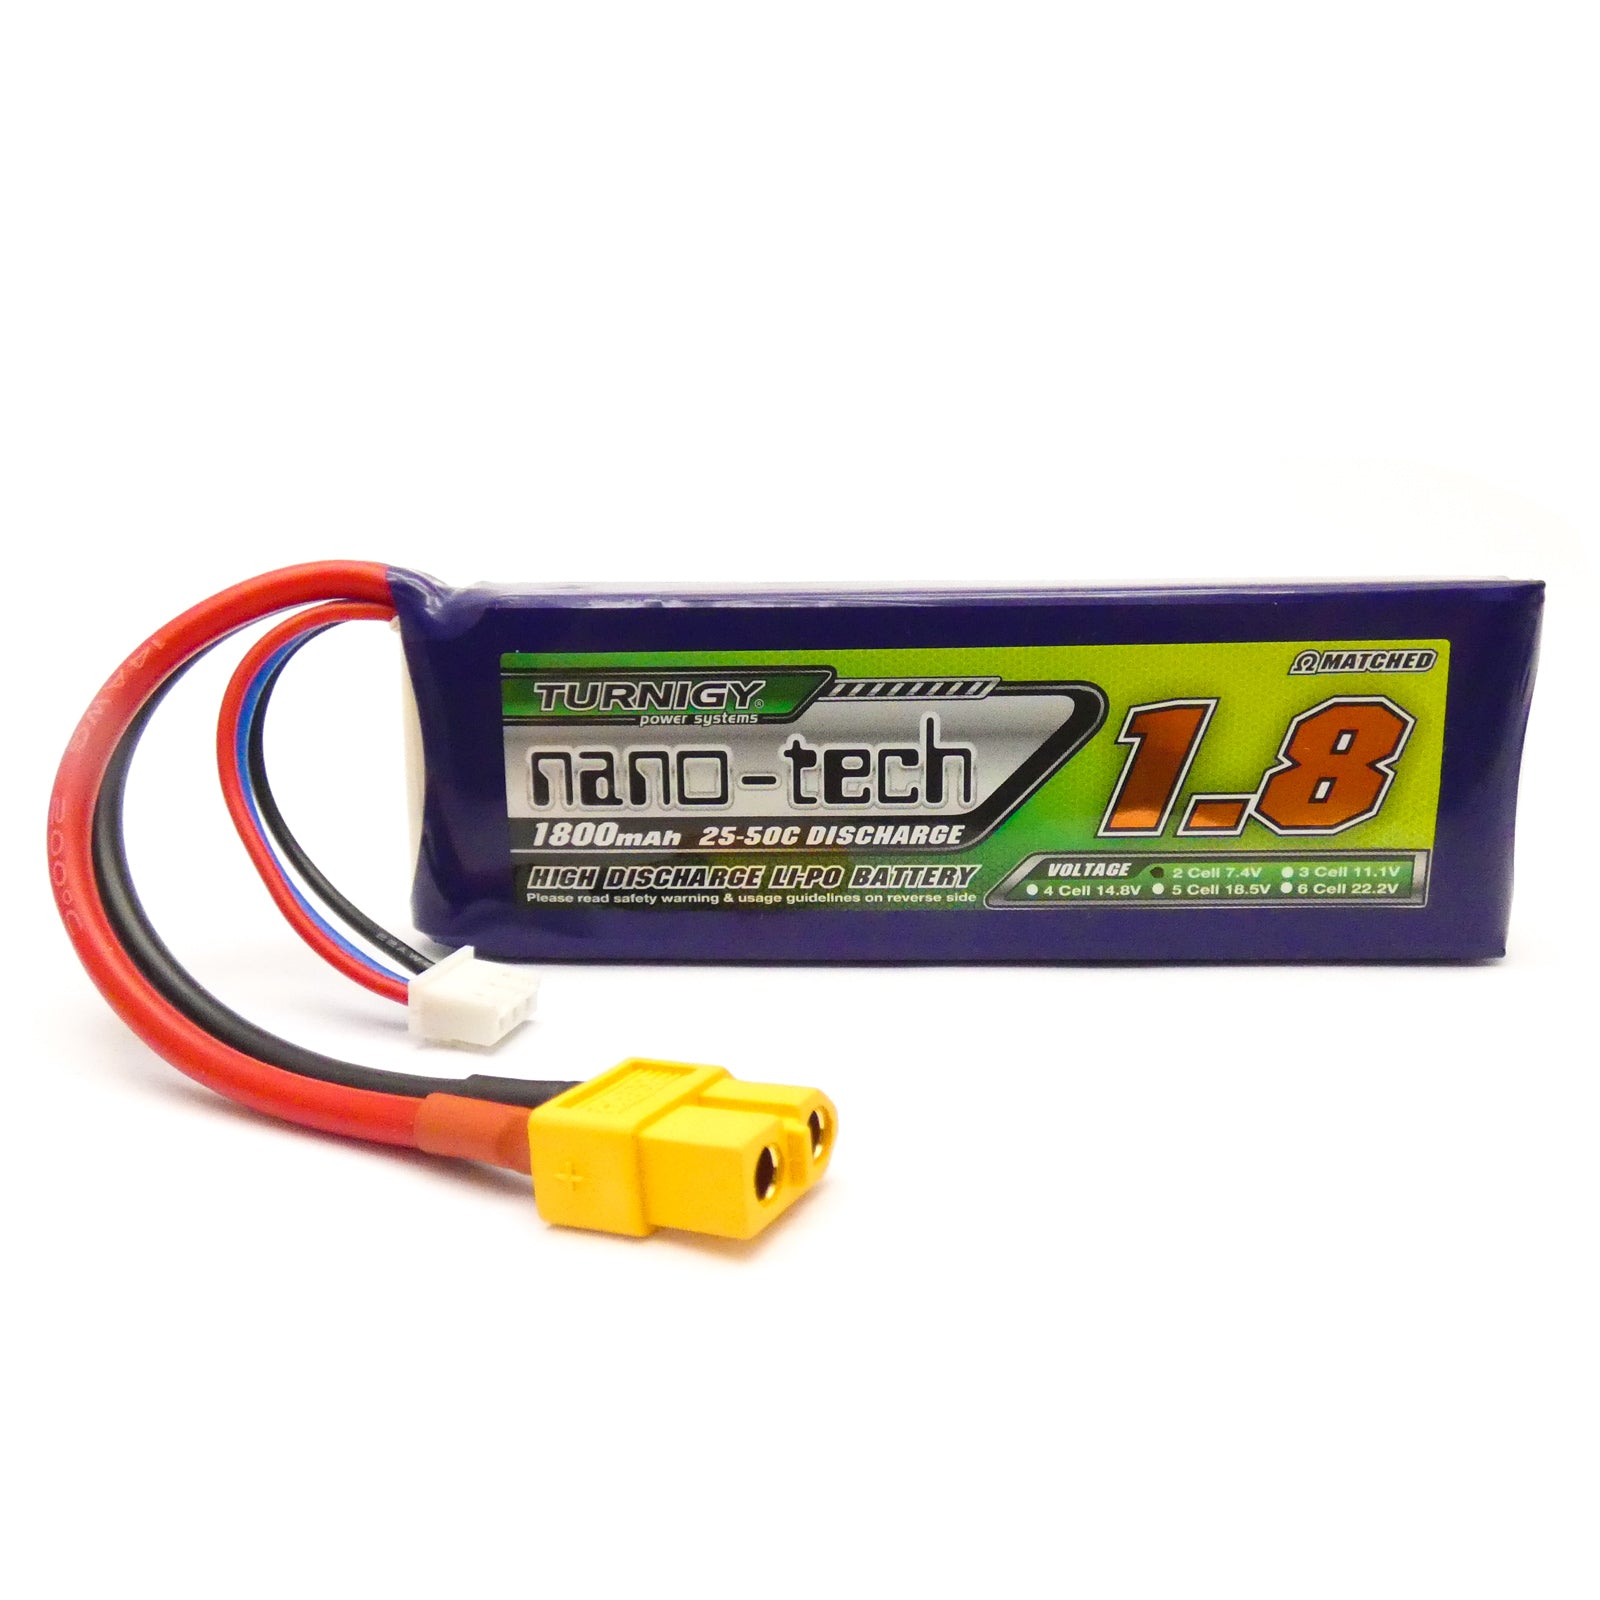 Turnigy Nano-Tech 1800mAh 2S LiPo Battery Pack 7.4V 25C 50C XT Connector Plug